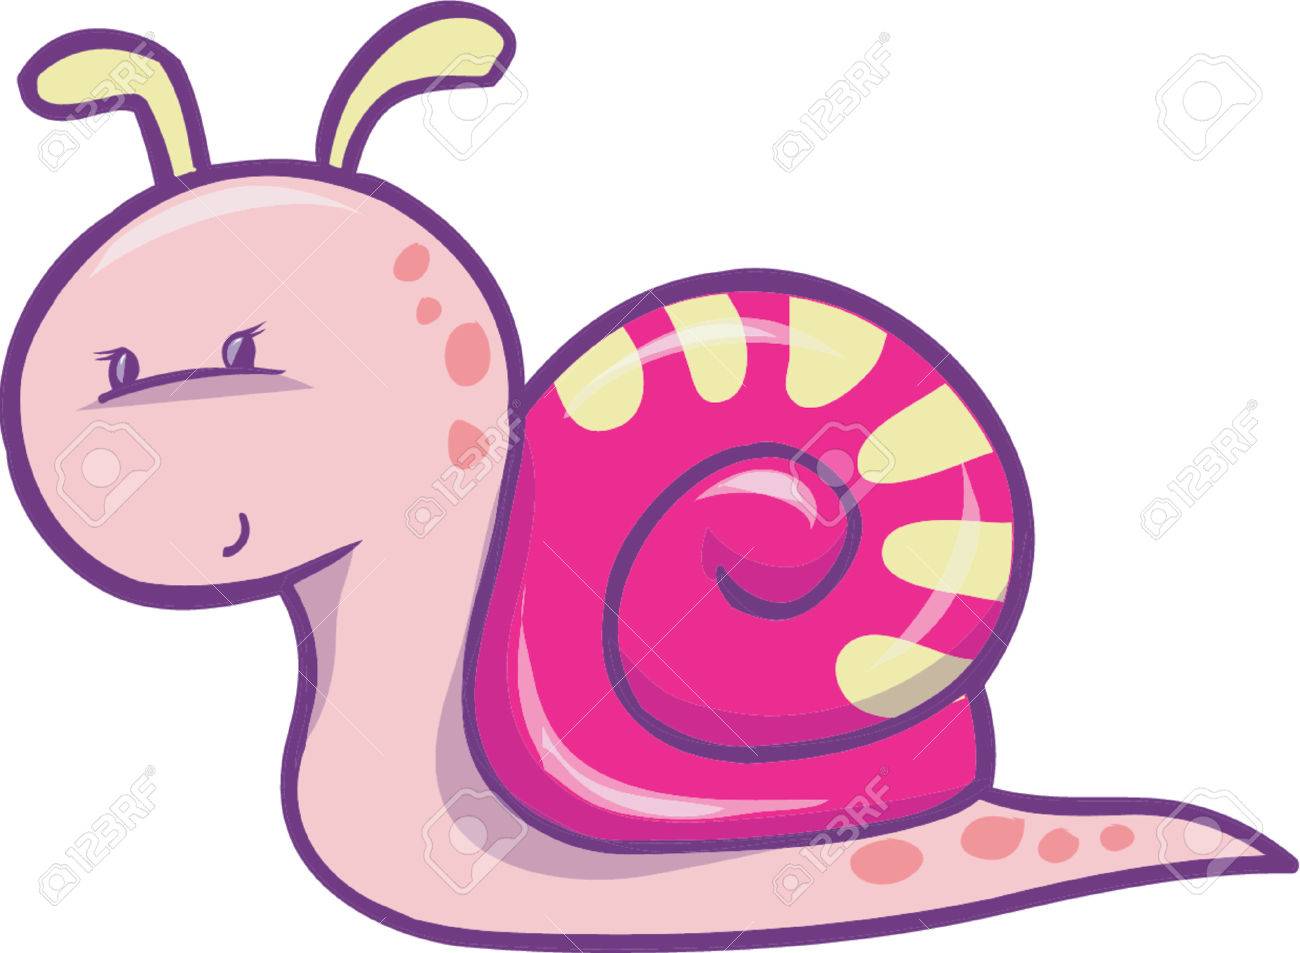 Snail Clipart pink